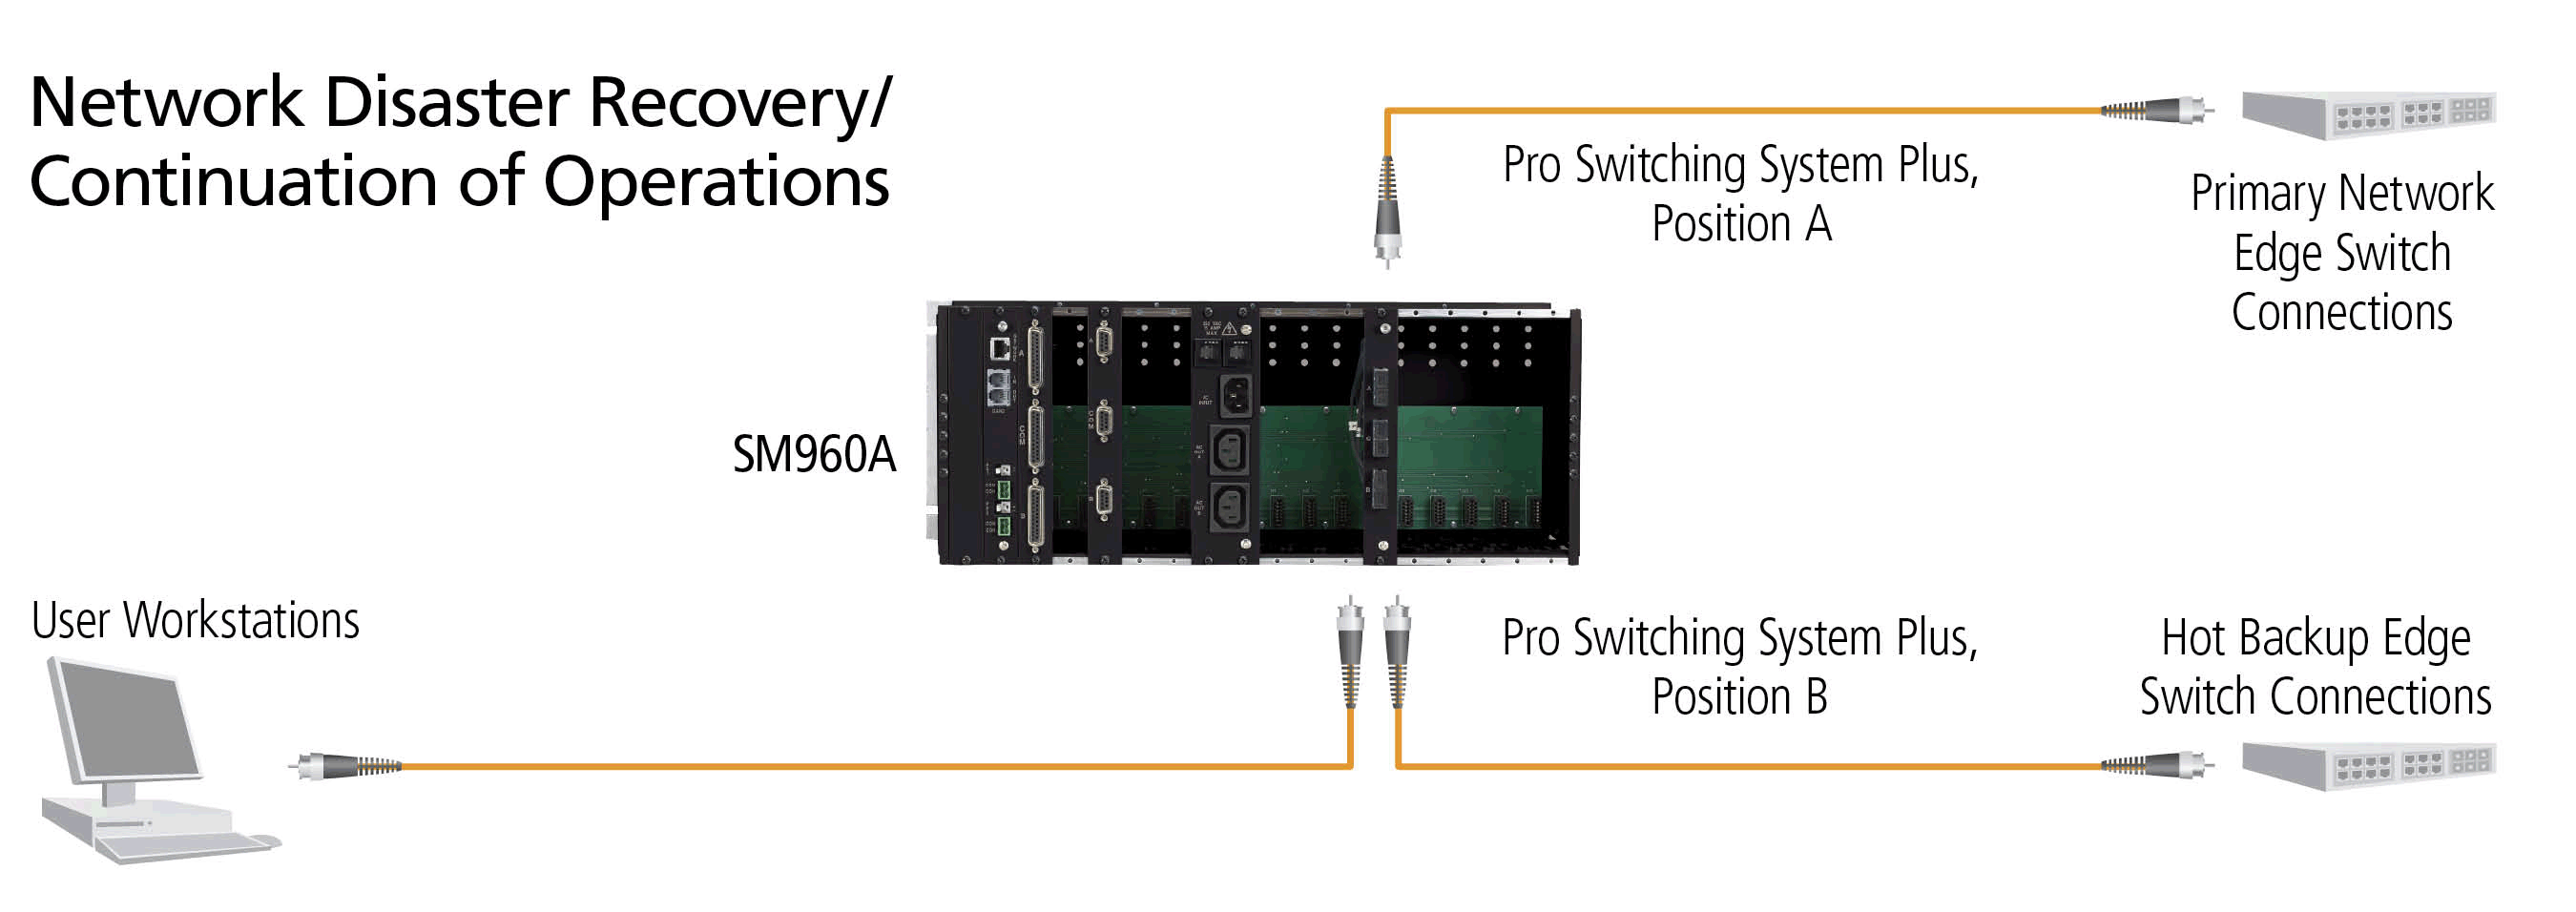 Pro Switching System Plus Løsningsskisse